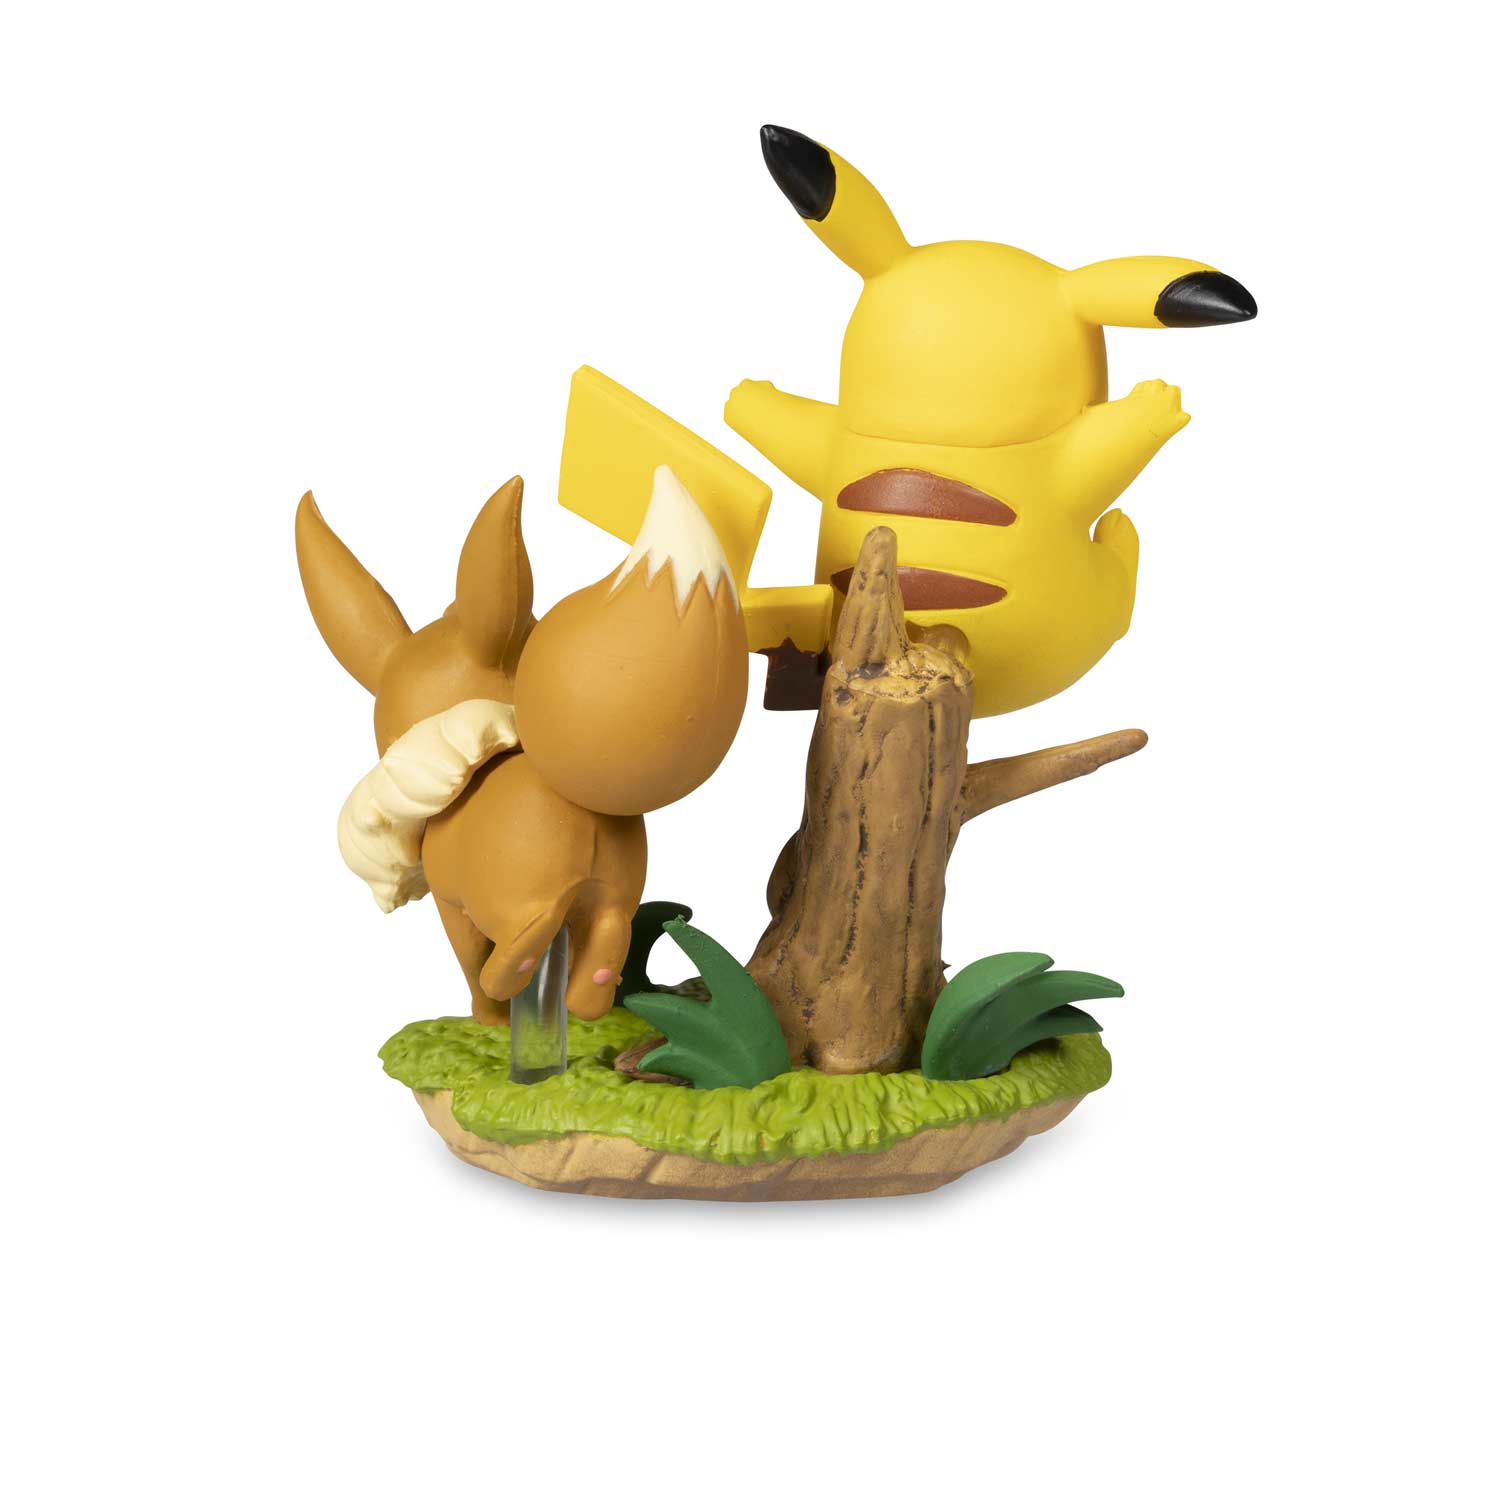 Pokémon Tcg Pikachu Eevee Poké Ball Collection